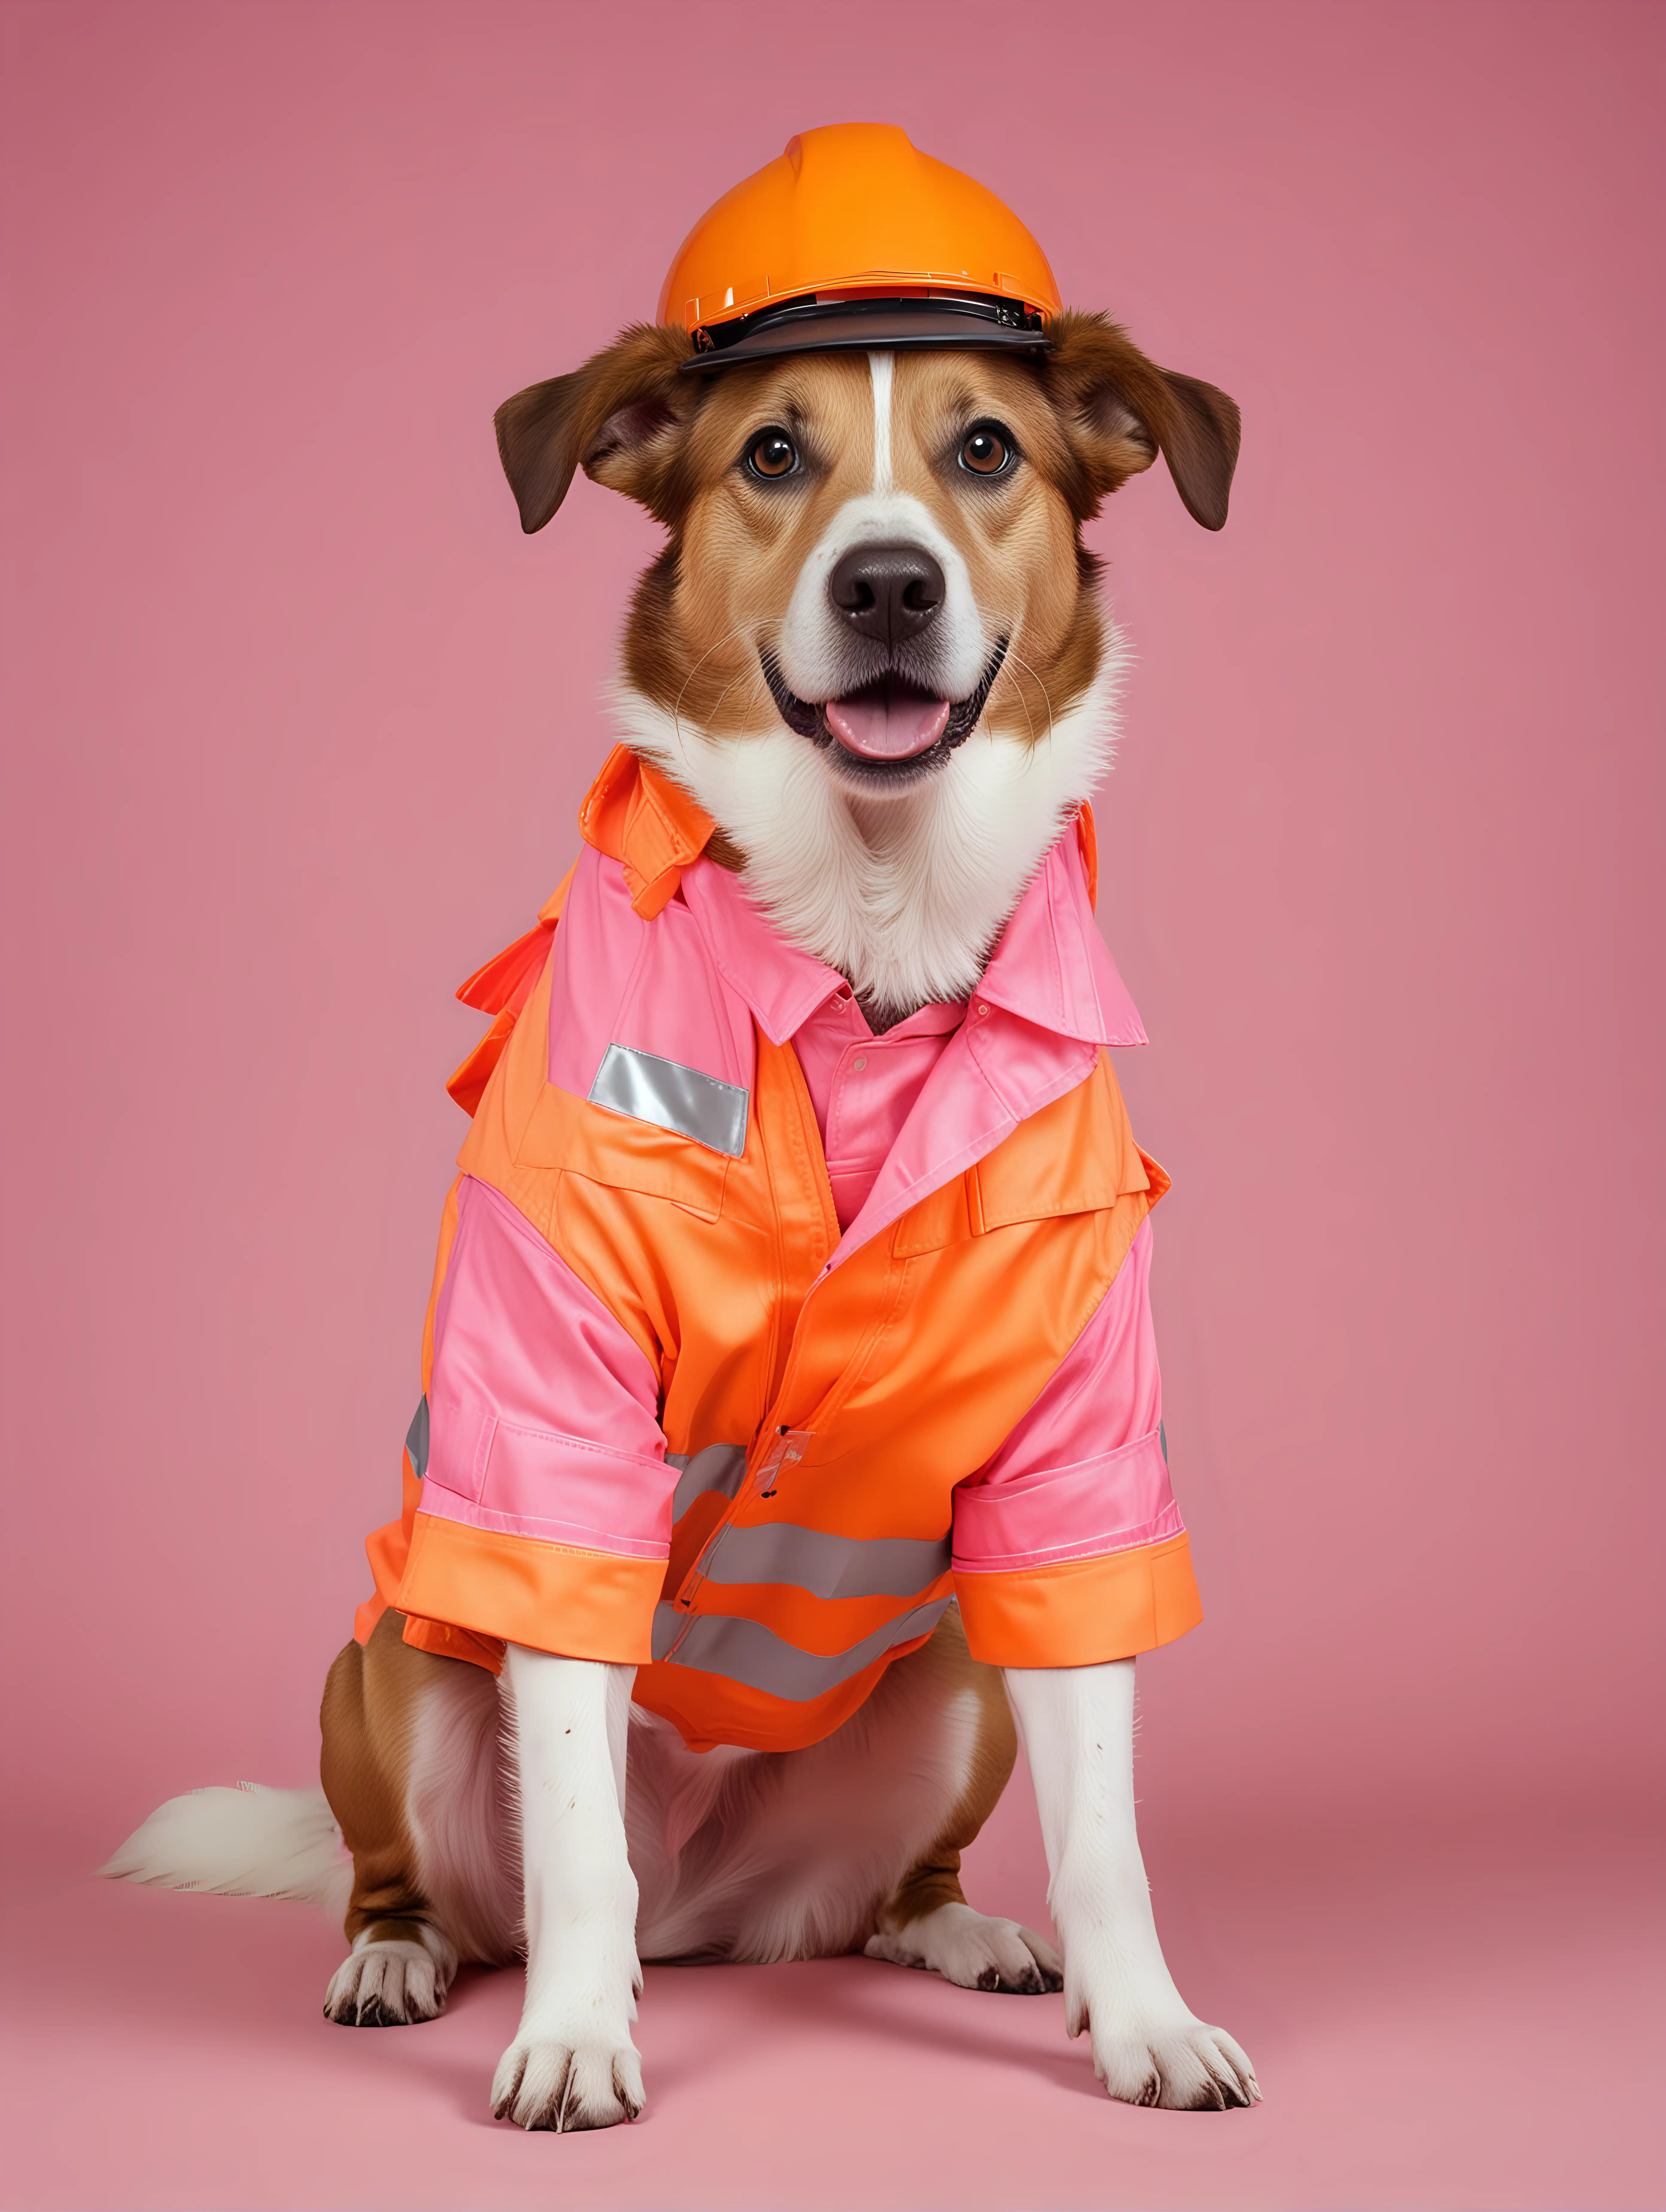 Adorable Dog in Vibrant Orange Builder Outfit on Pink Background